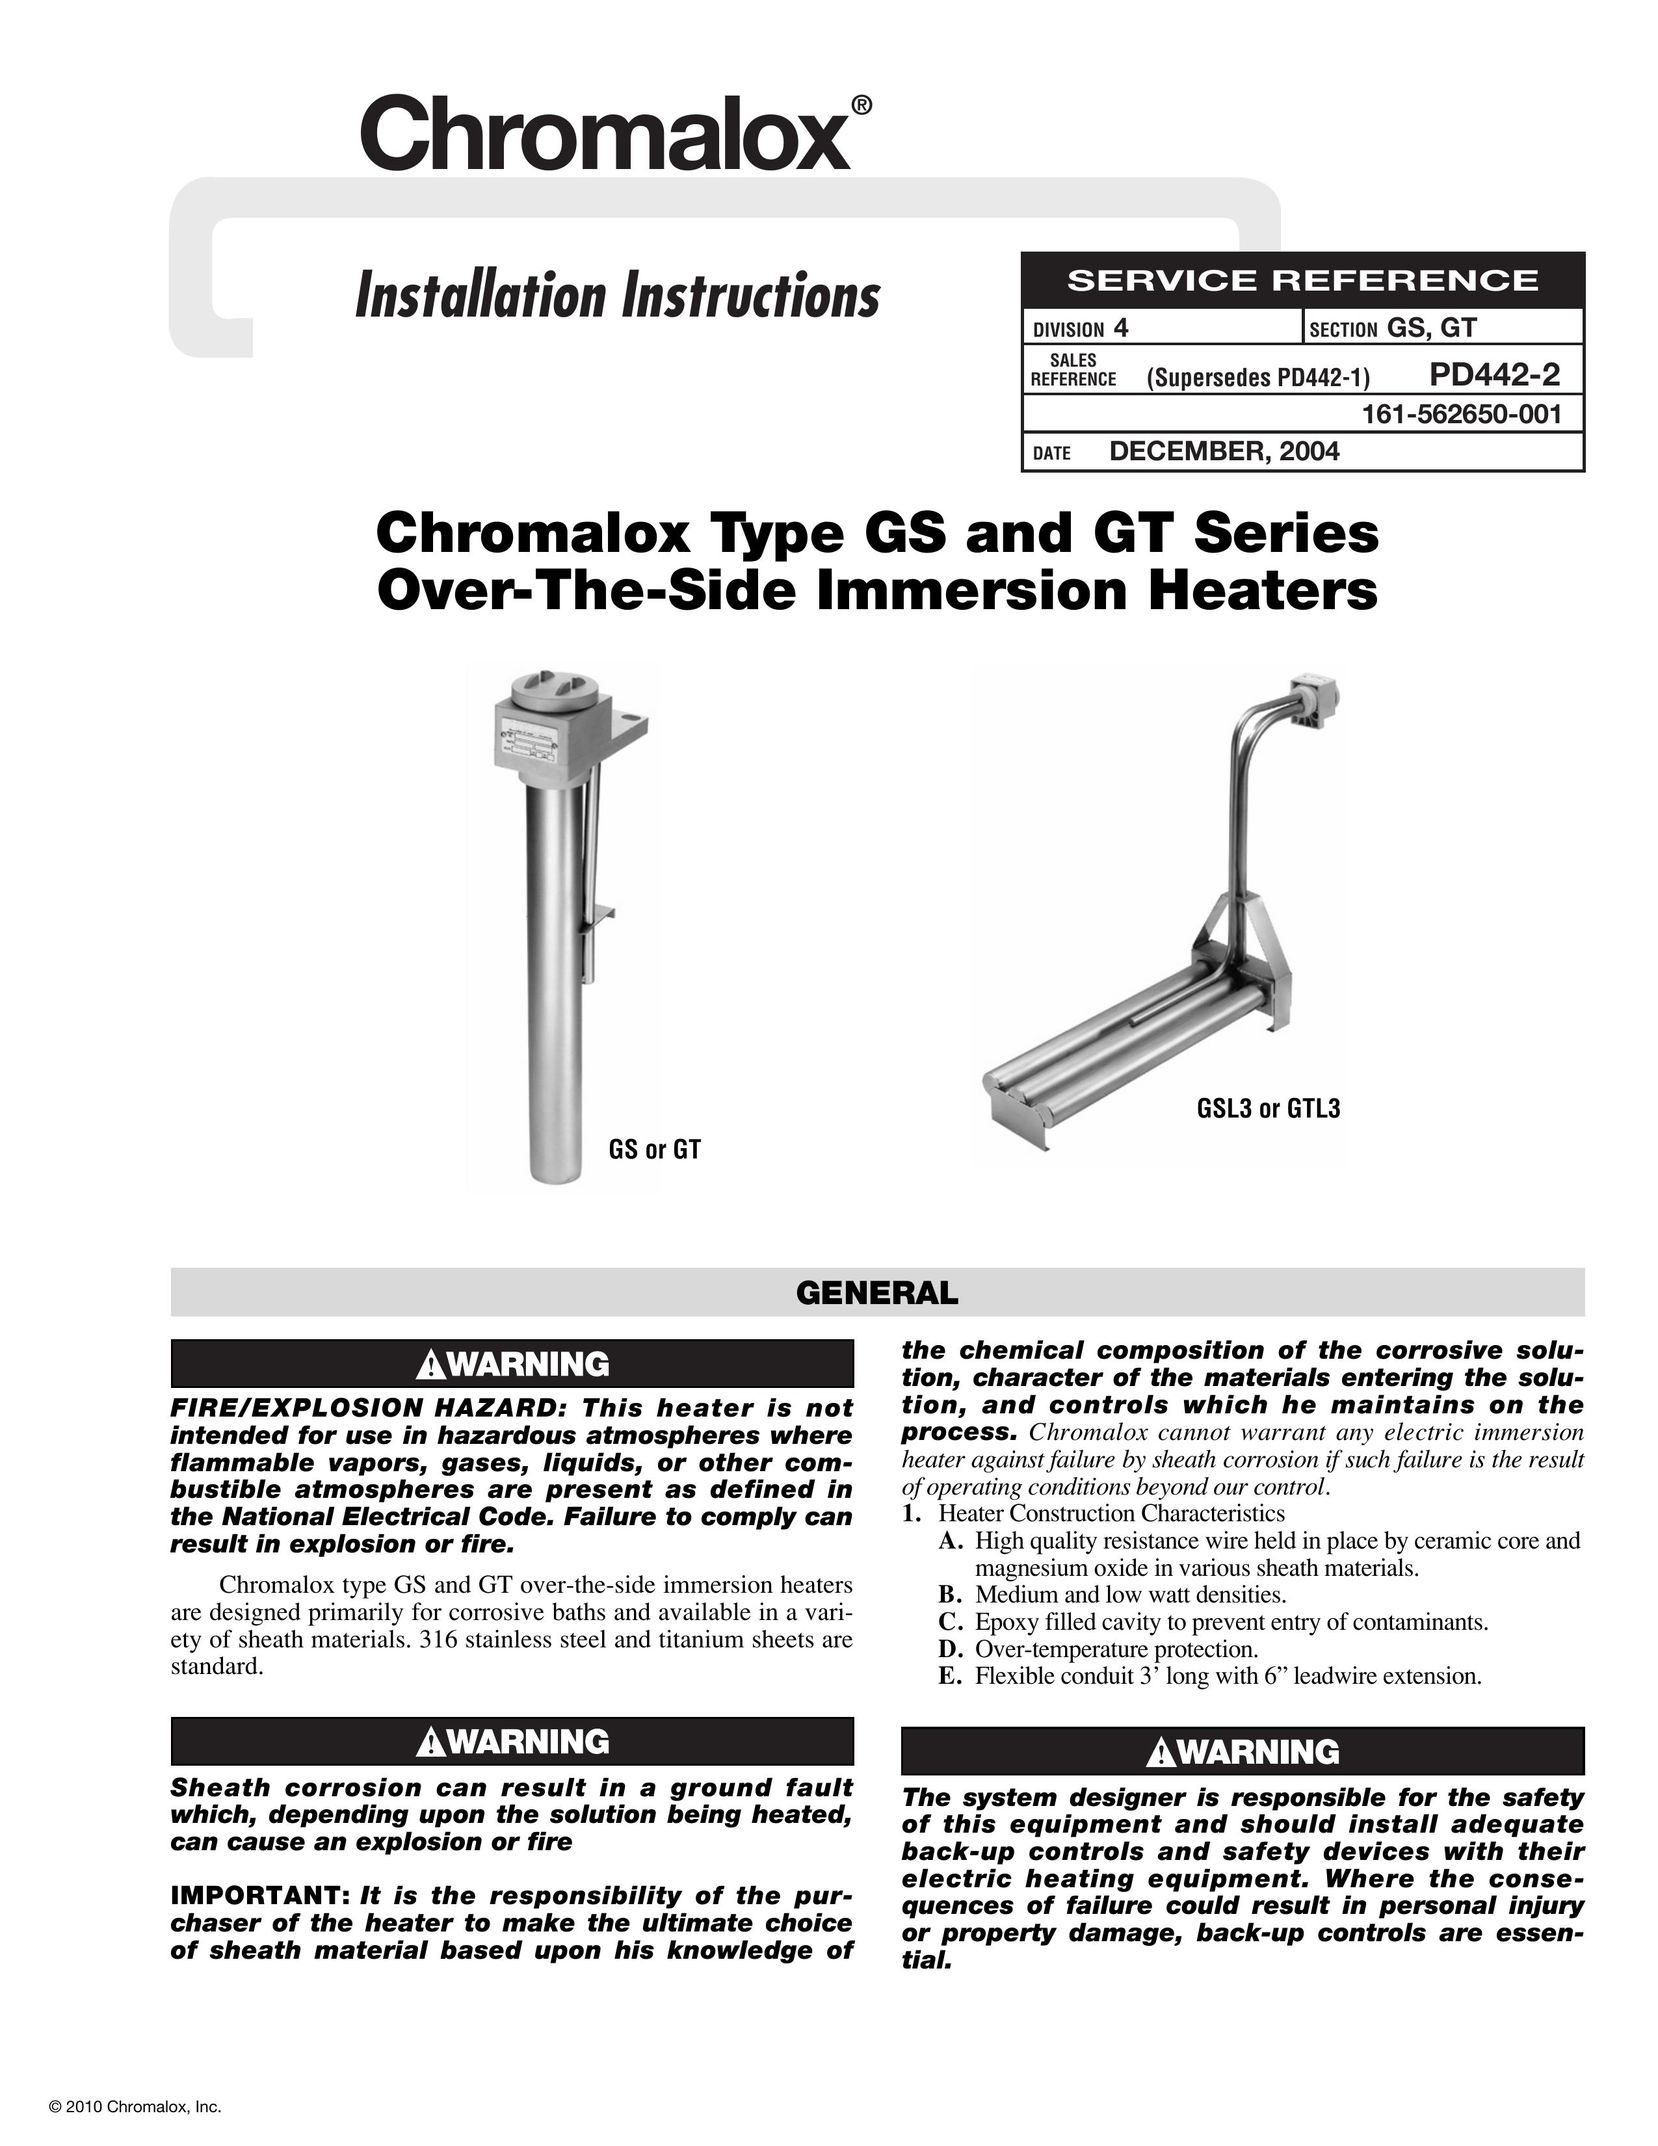 Chromalox GSL3 Electric Heater User Manual